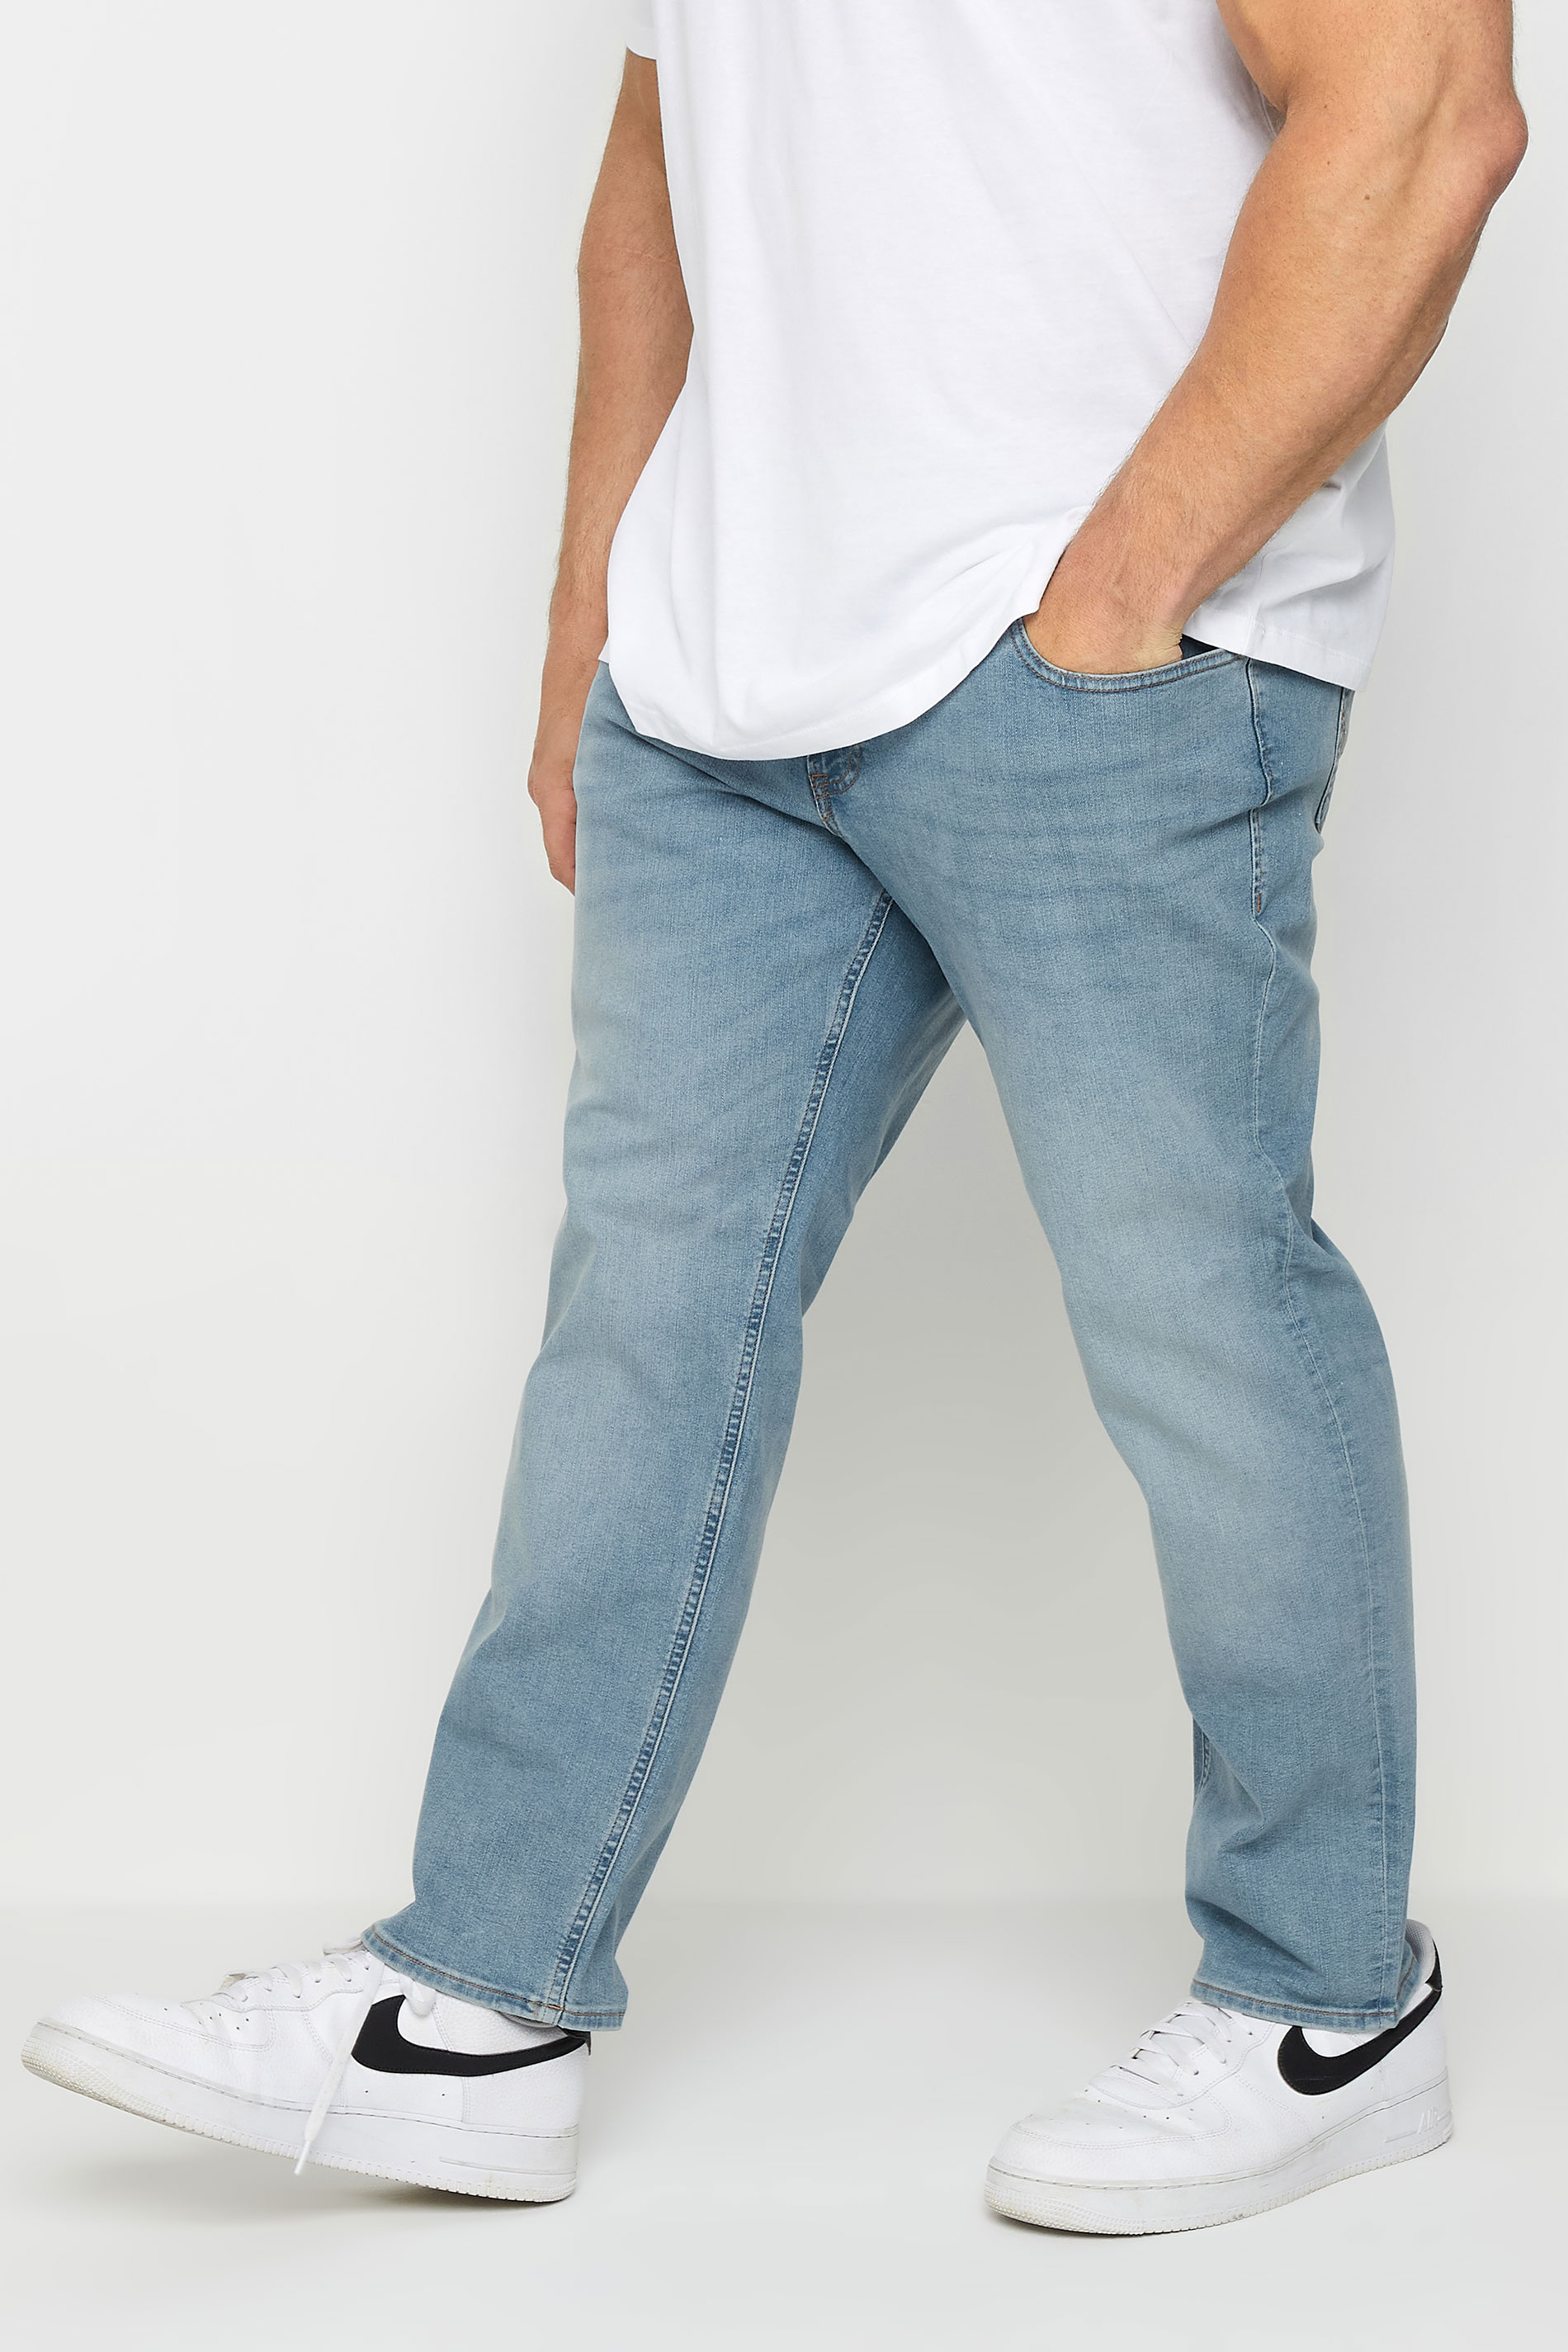 Image of Inside Leg Size 30", Waist Size 42 Mens Jack & Jones Big & Tall Blue Light Wash Mike Jeans Big & Tall